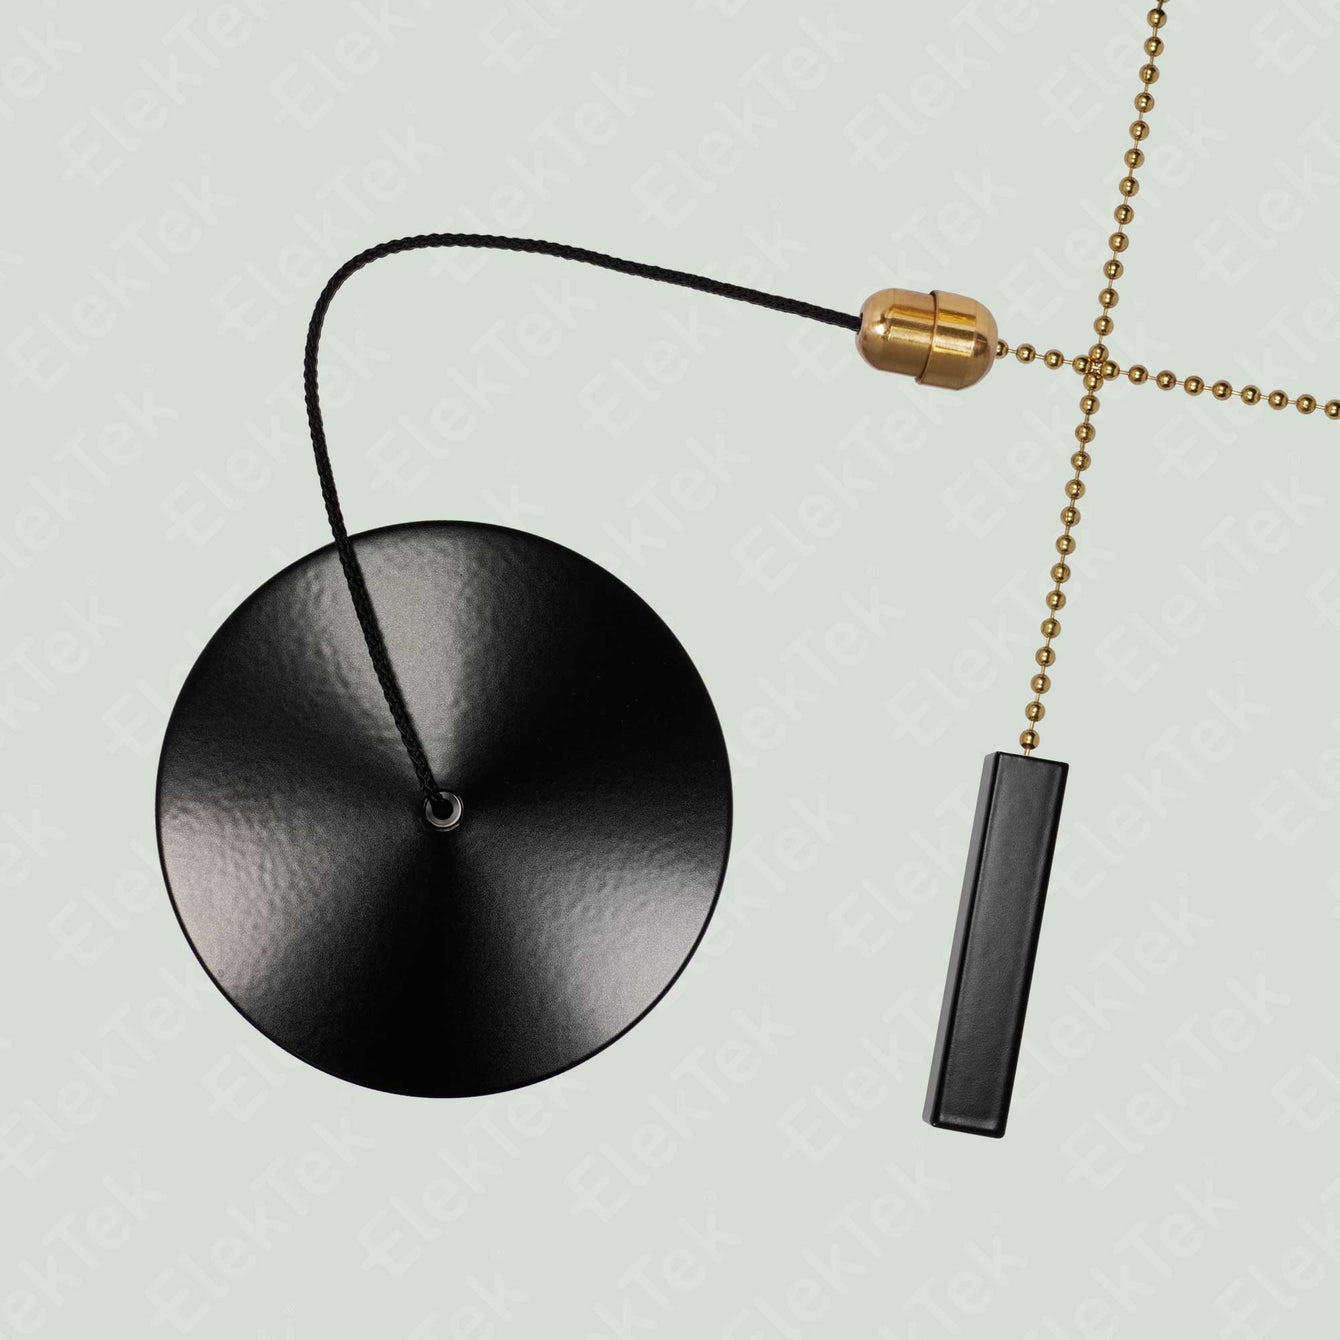 ElekTek Premium Black Bathroom Light Pull Cord Switch Kit with Pull Chain Handle Black Cylinder / Black